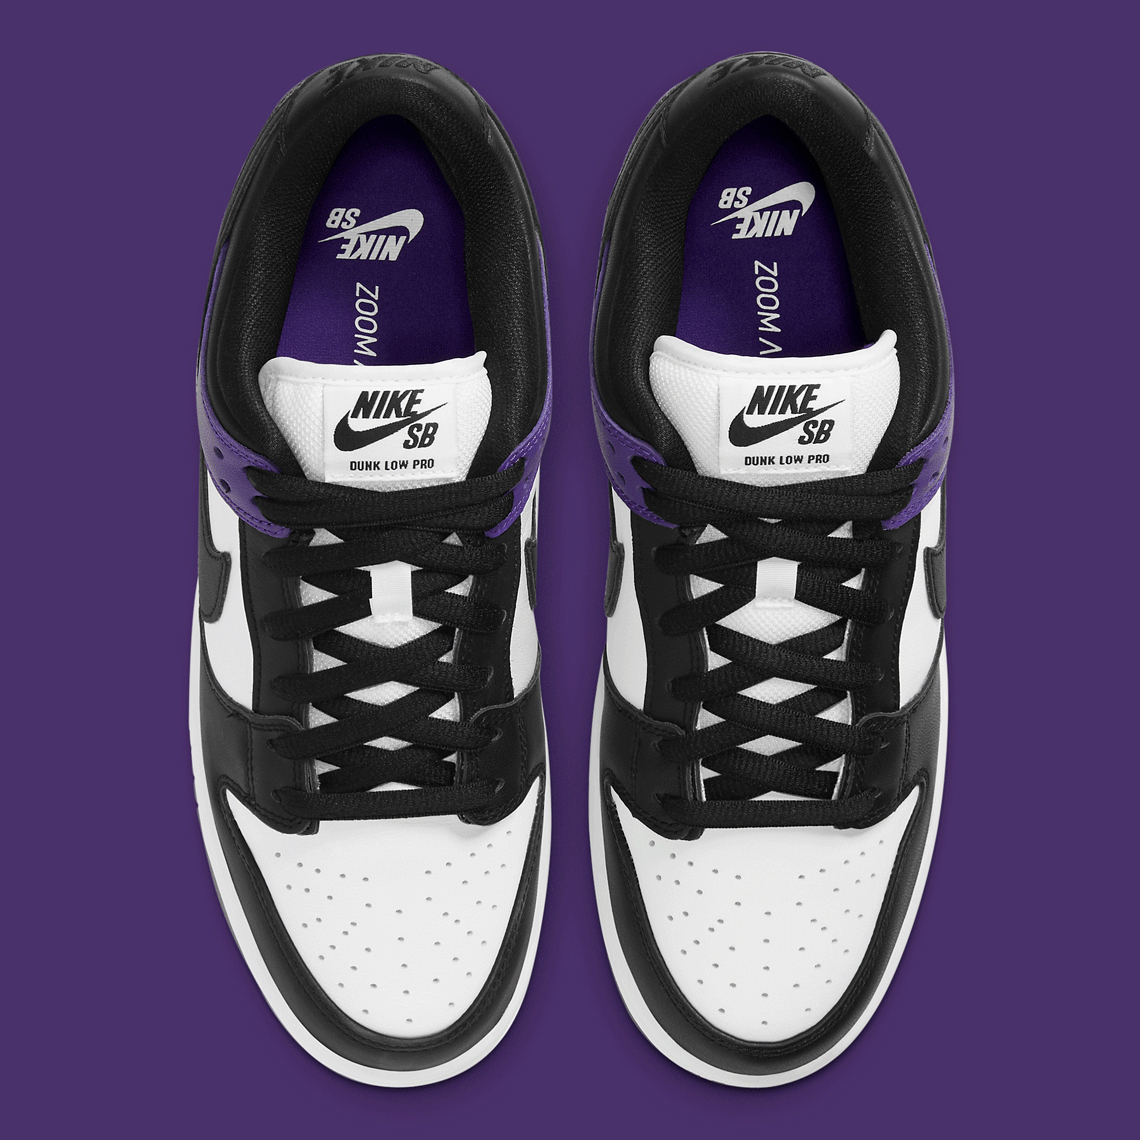 Nike SB Dunk Low Court Purple BQ6817 500 SneakerNews com